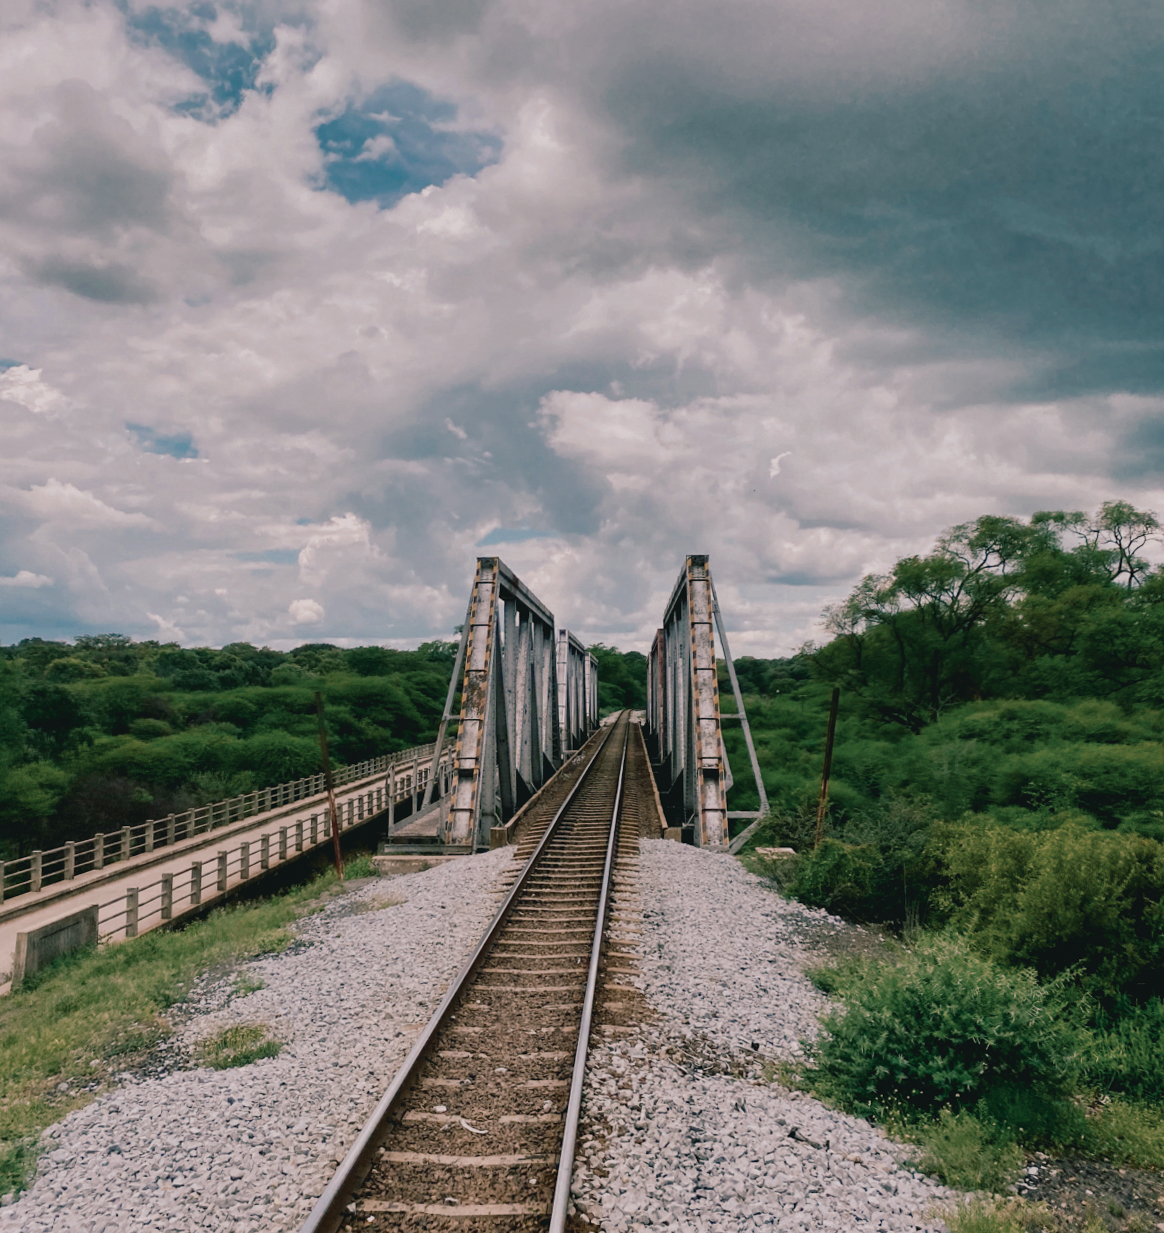 Train tracks in rural Zimbabwe